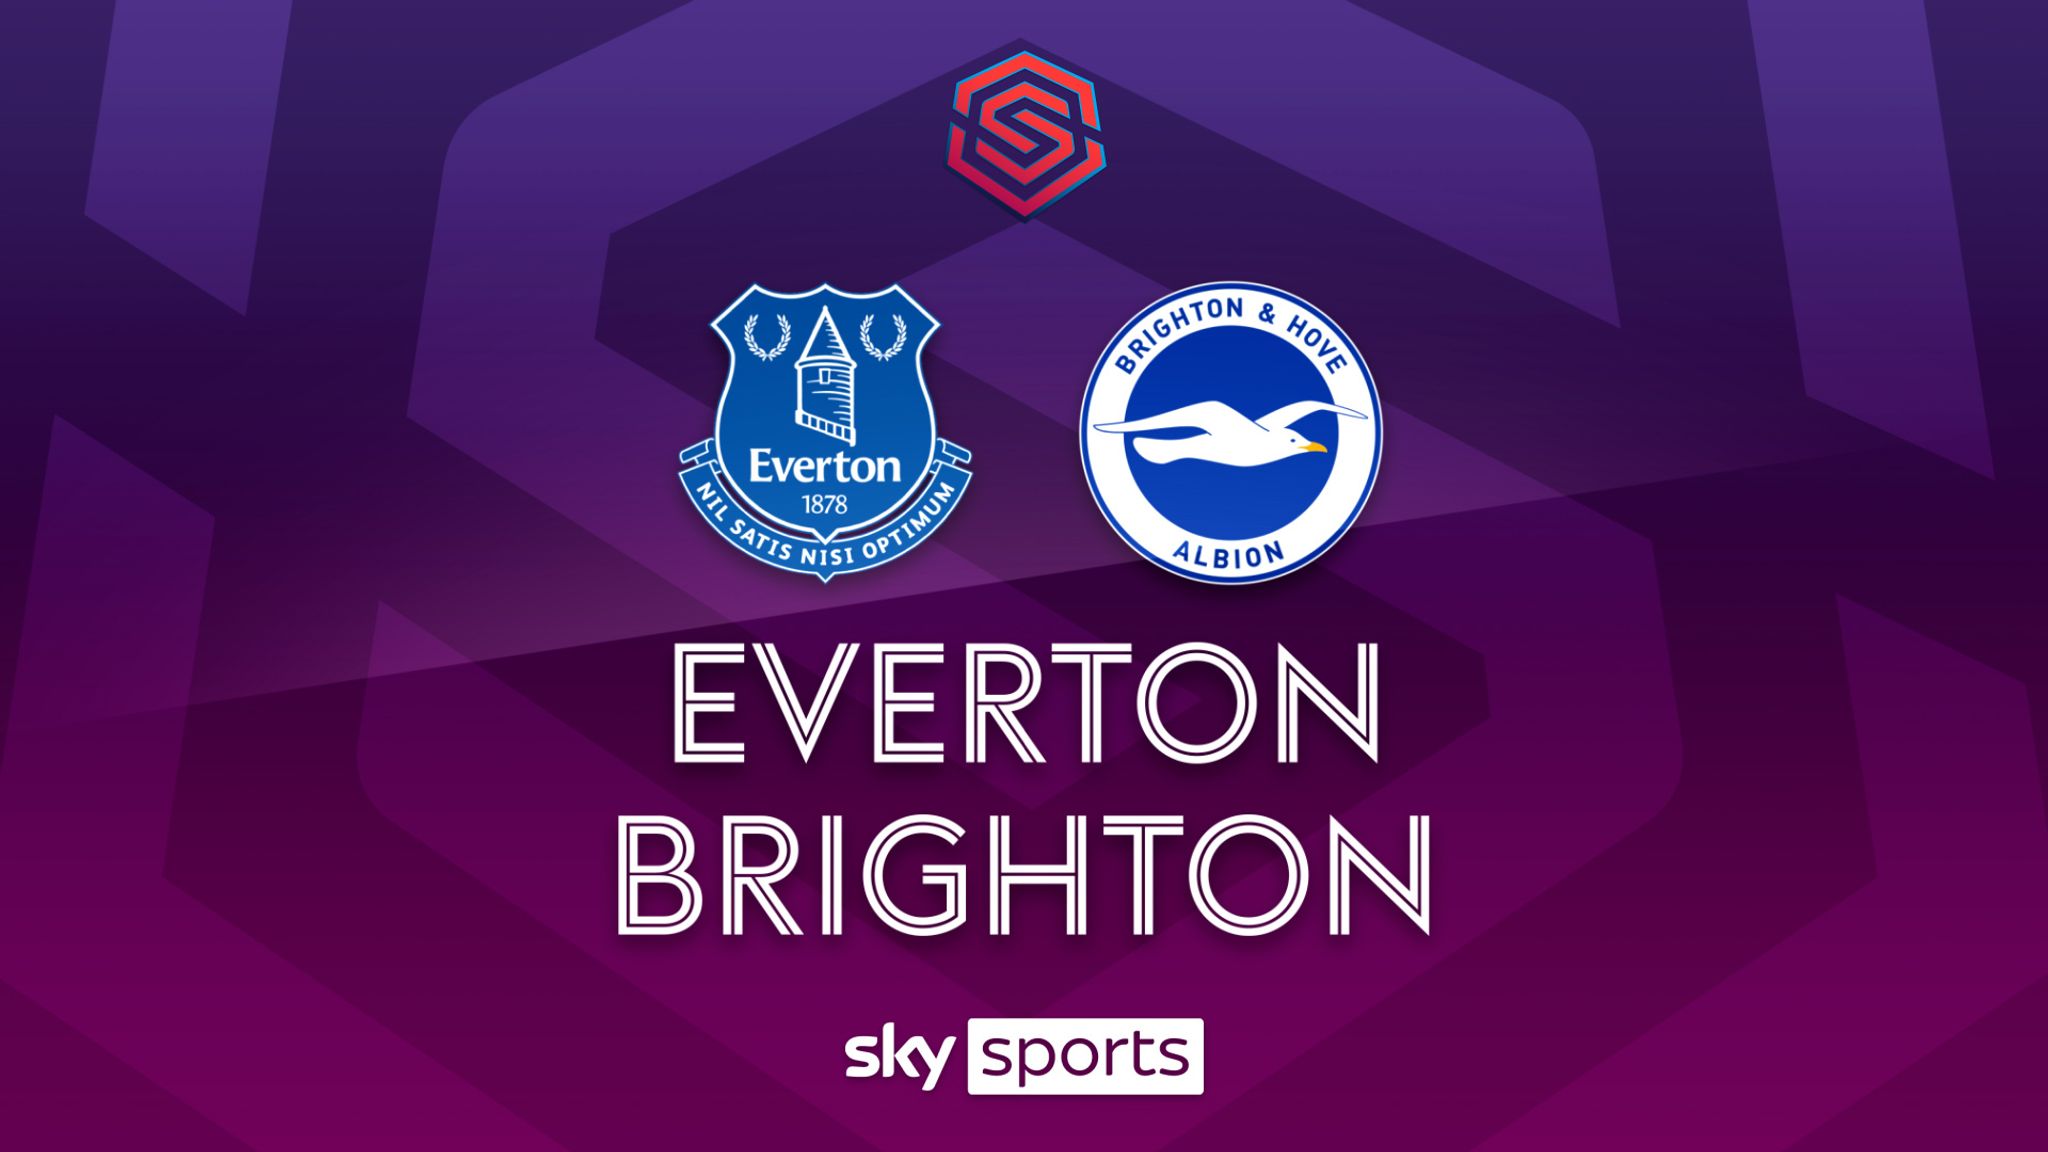 Everton 2-1 Brighton WSL highlights Video Watch TV Show Sky Sports